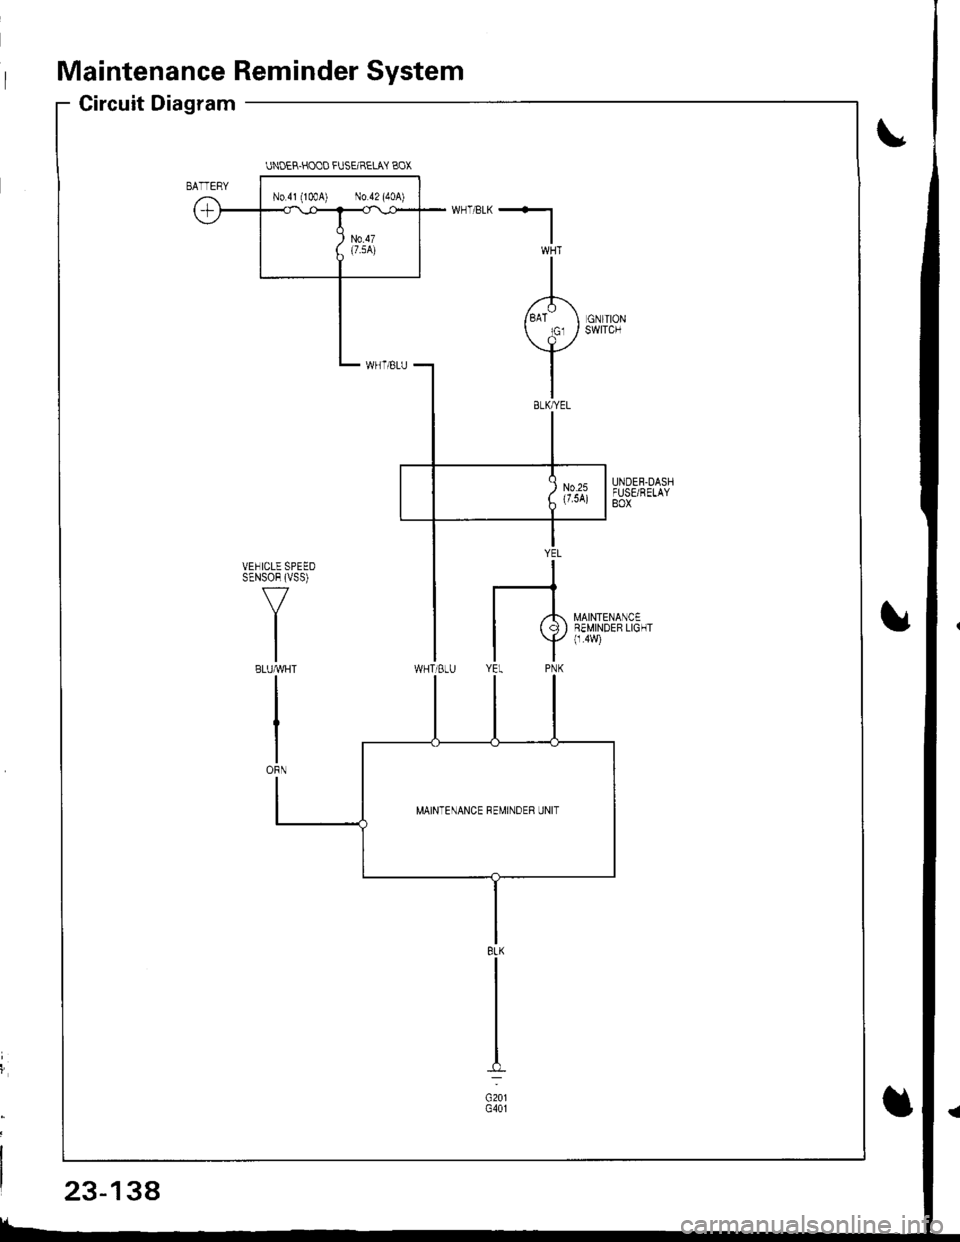 HONDA INTEGRA 1998 4.G Workshop Manual Maintenance Reminder System
Circuit Diagram
UNOER.HOOO FUSEIRELAY BOX
N0.41 (lmA) No 42 (40A)
MAINTENANCE REMINDER UNIT
8LK
c201G401
23-138 